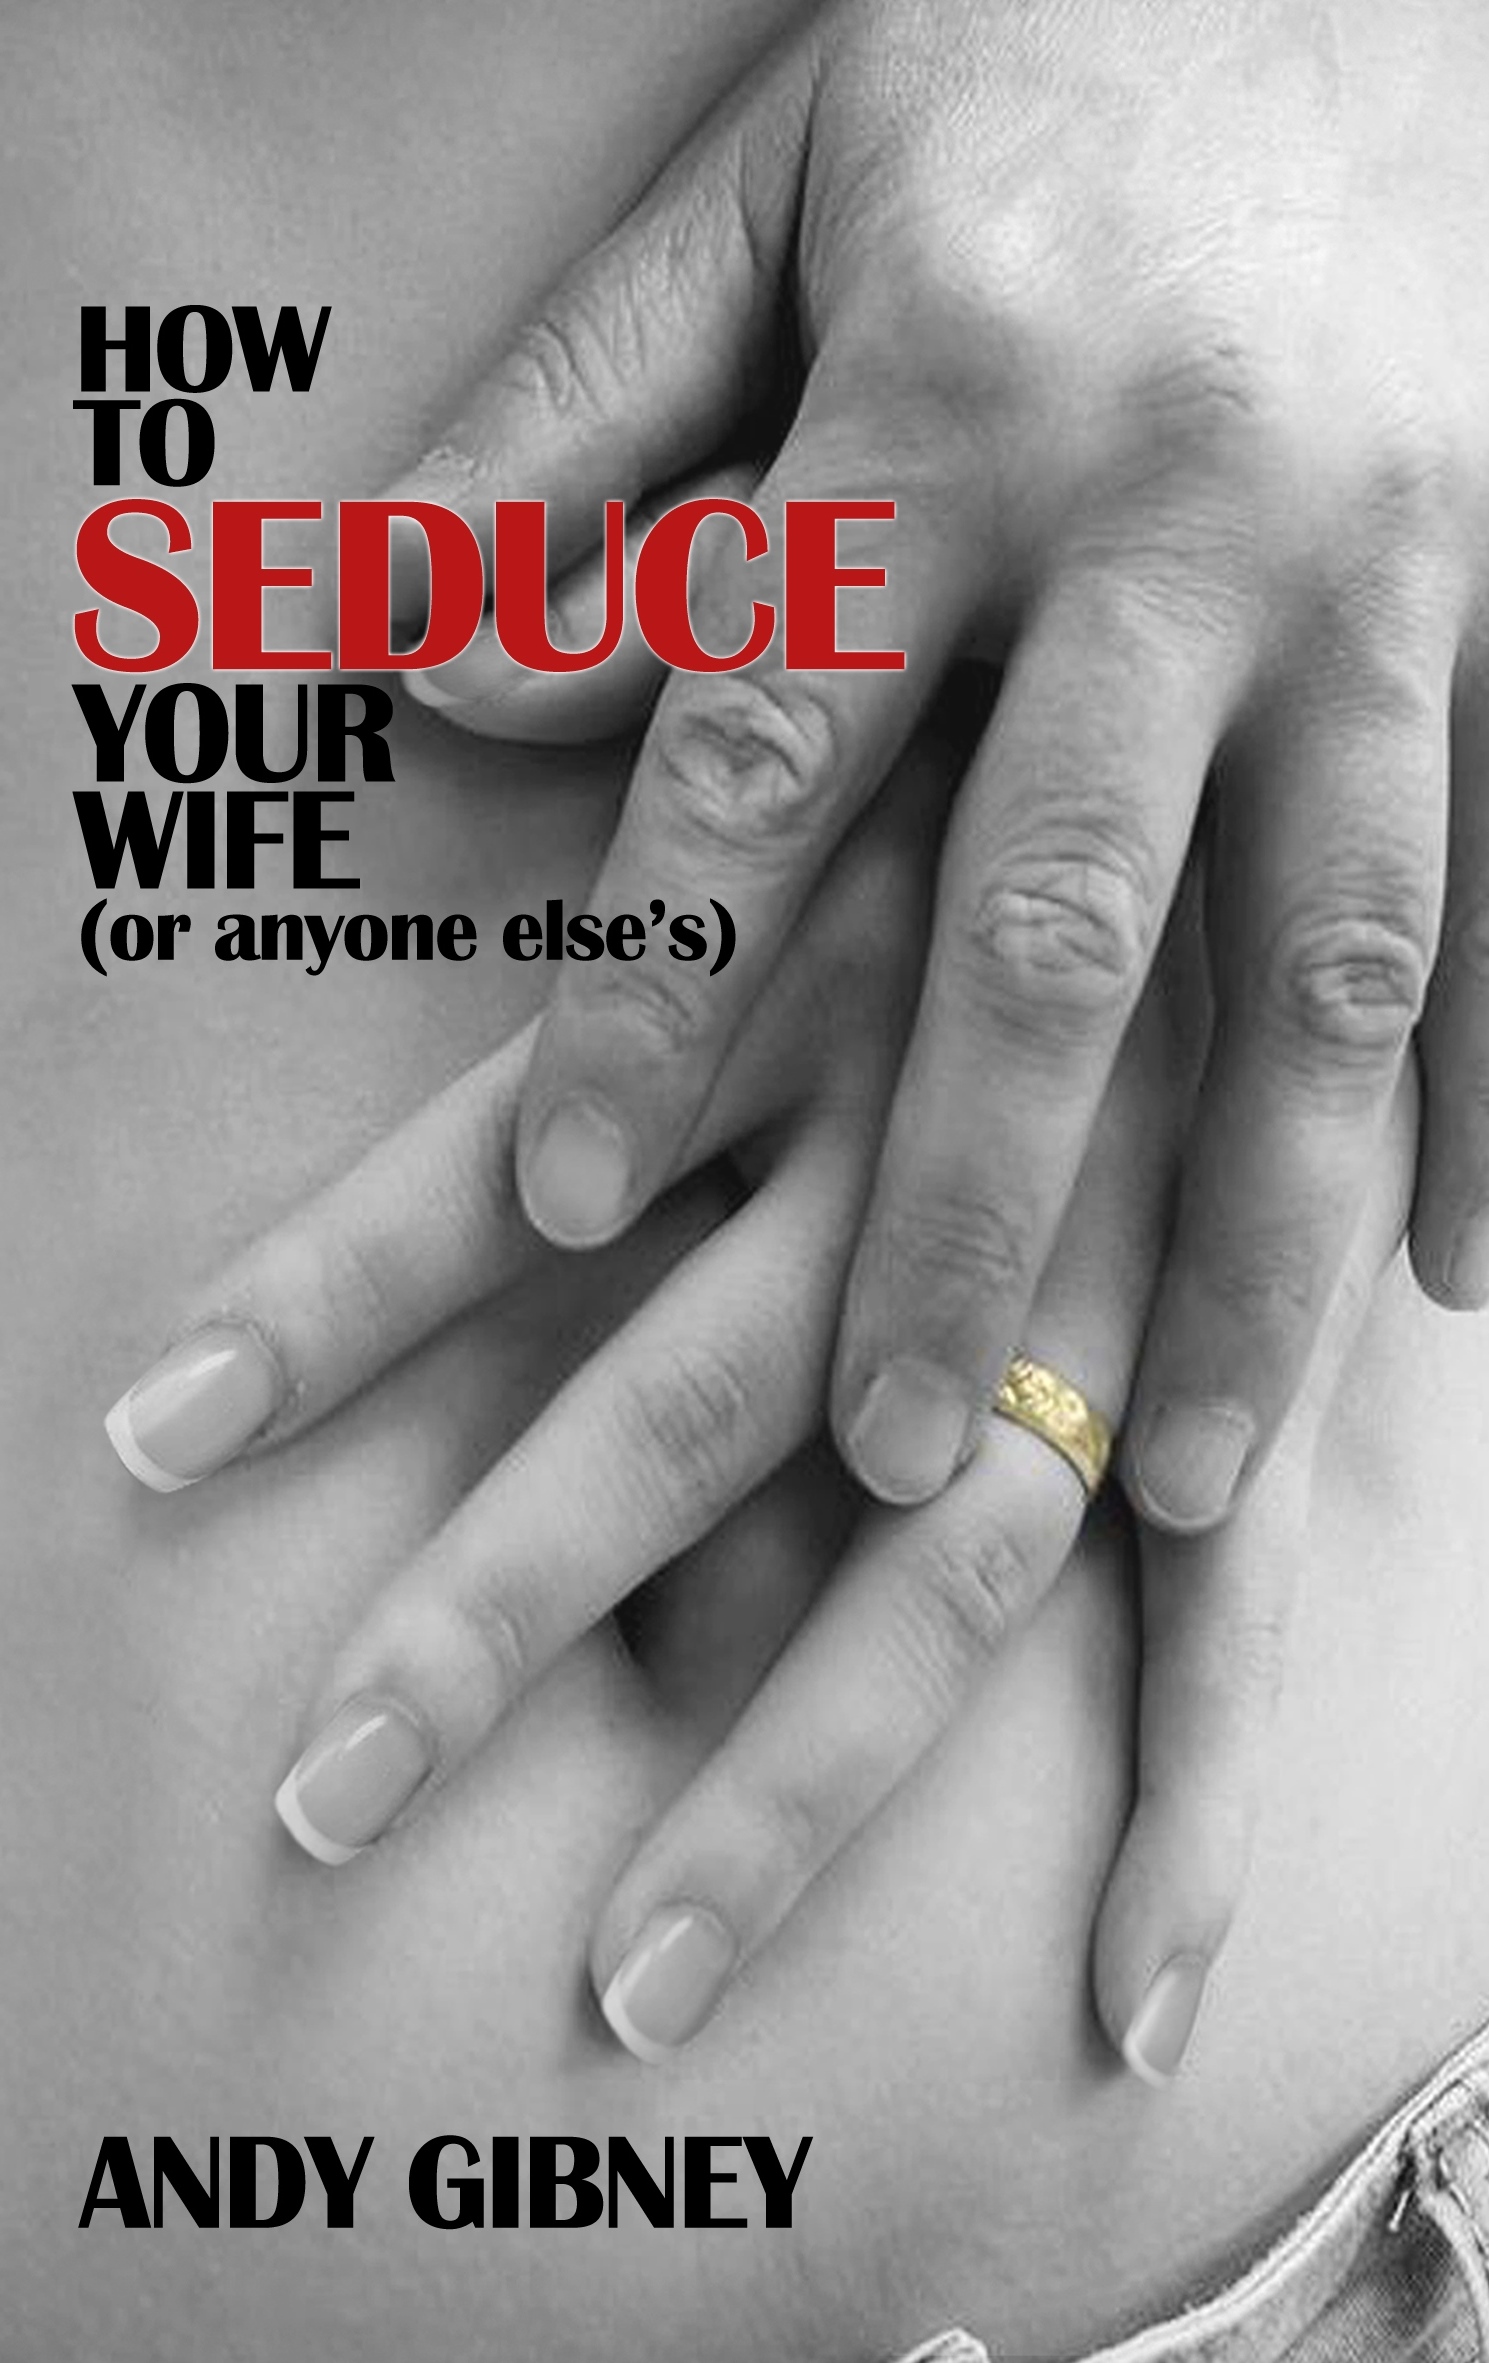 to seduce his wife